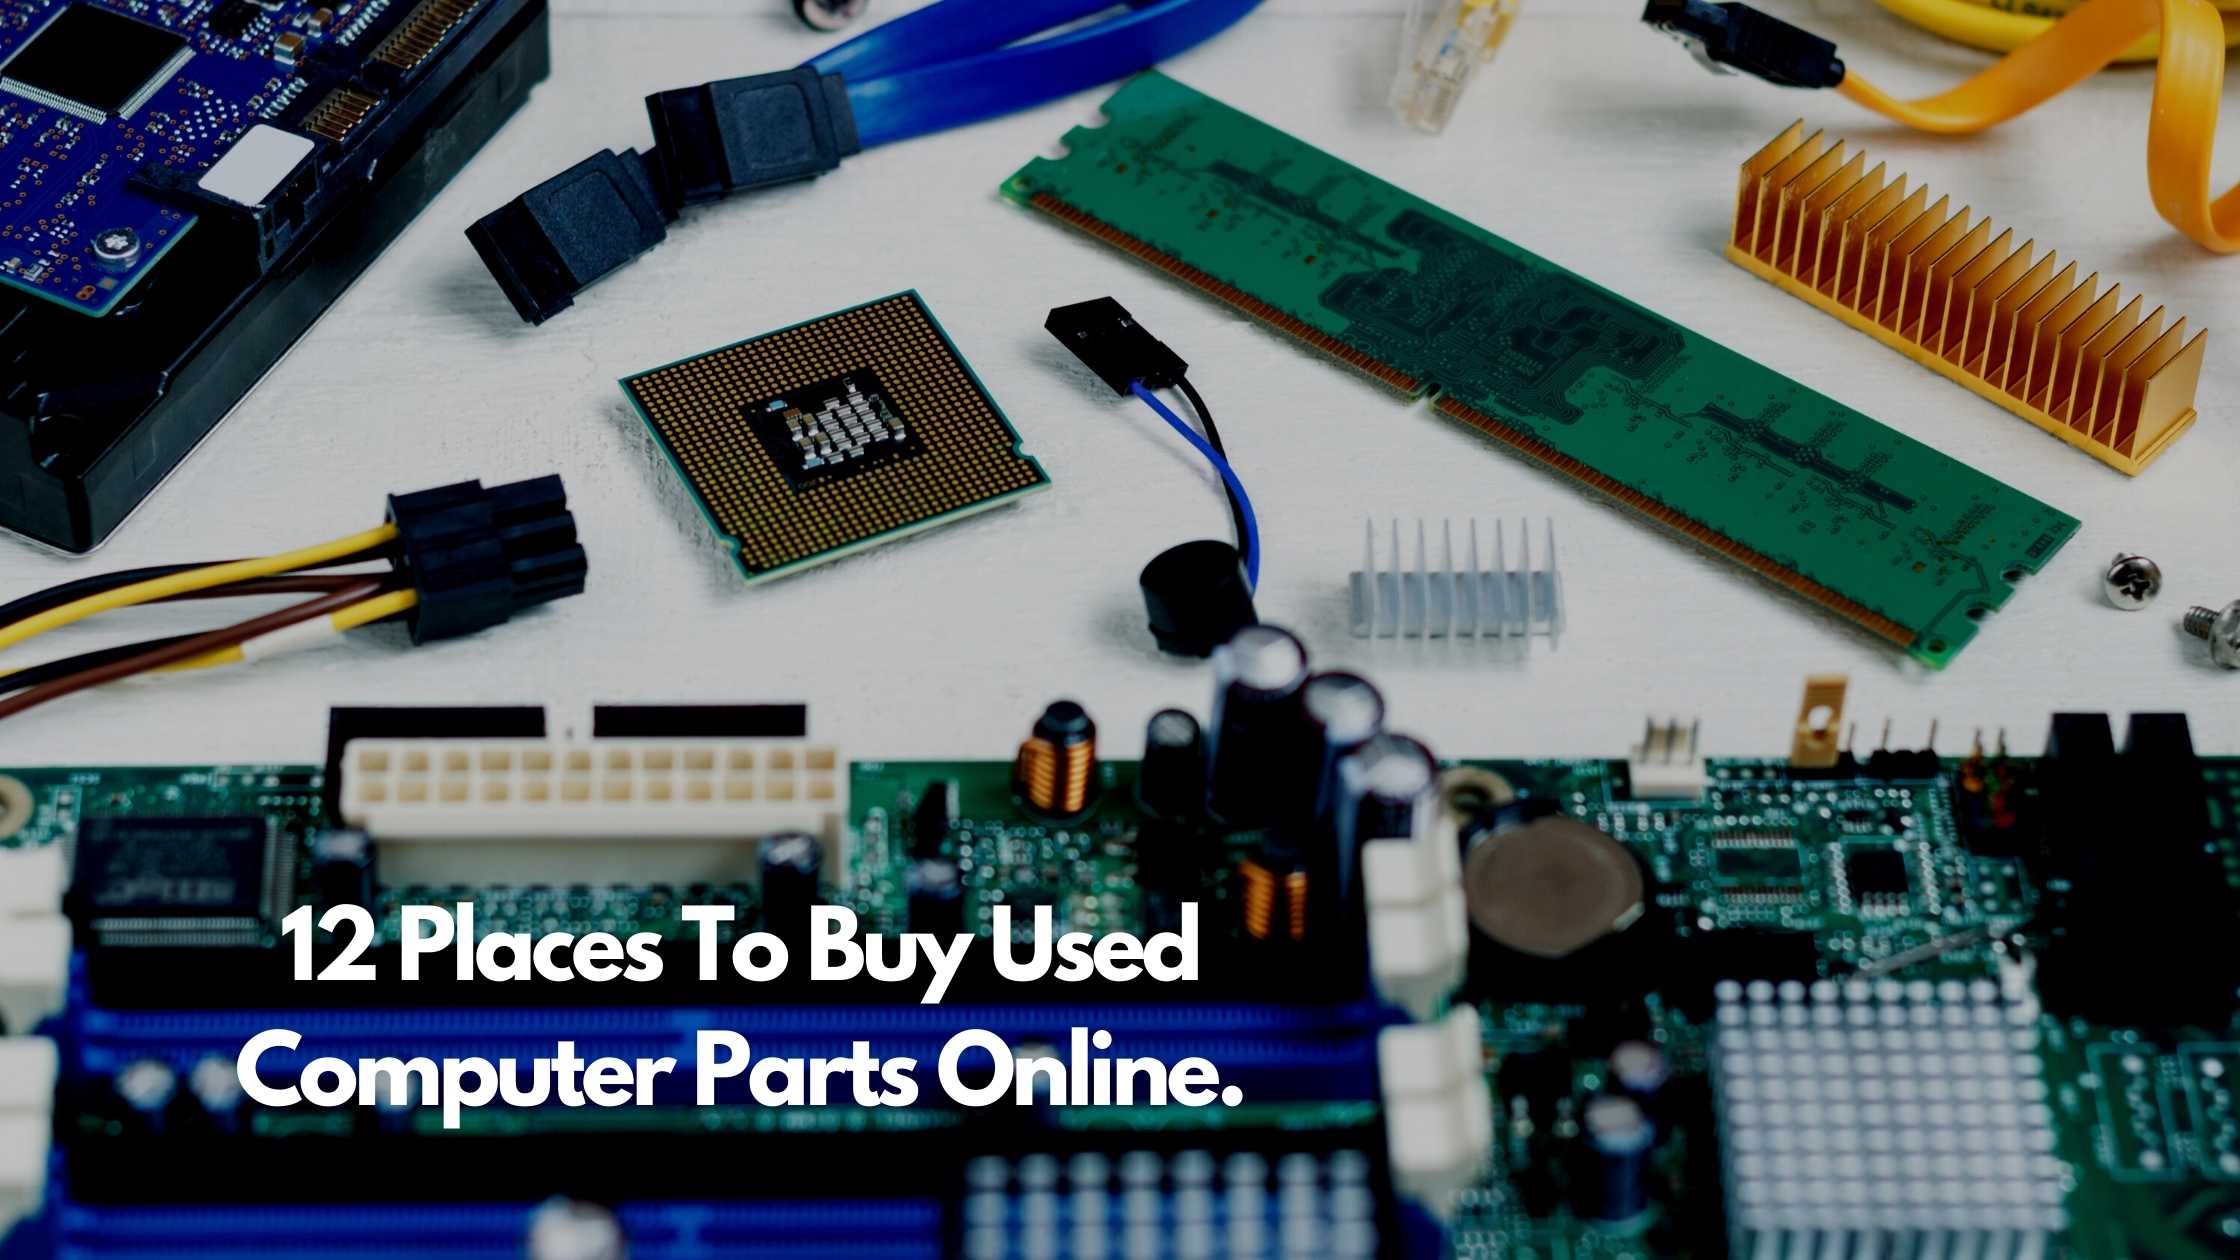 Online Market Computer parts, and Gadgets